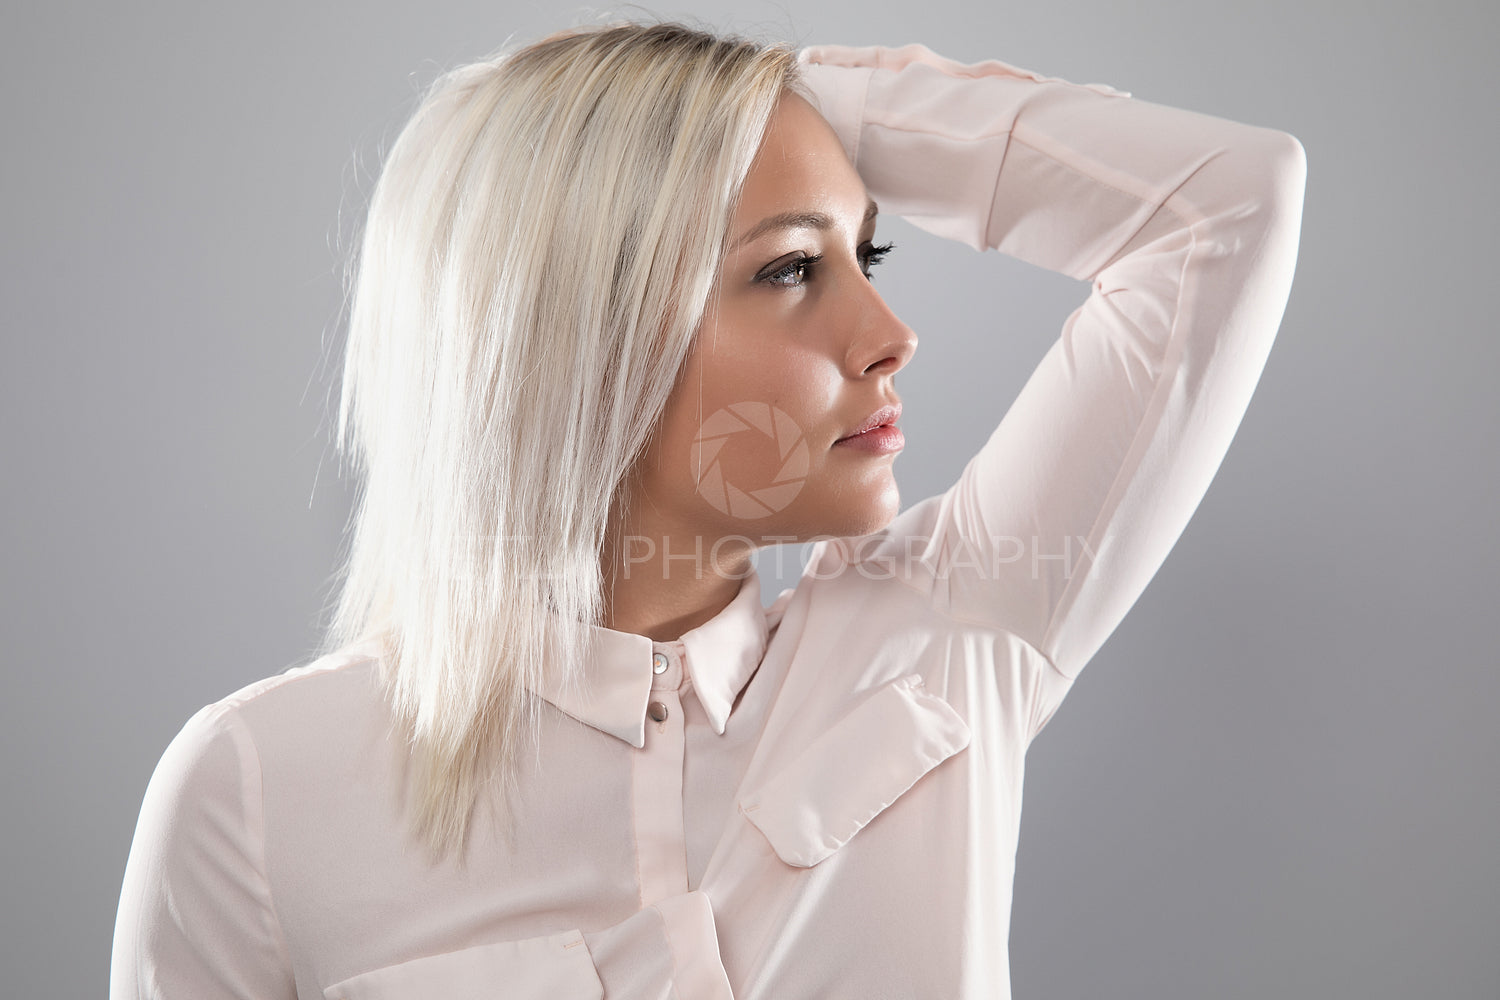 Beautiful female model in shirt holding her blonde hair